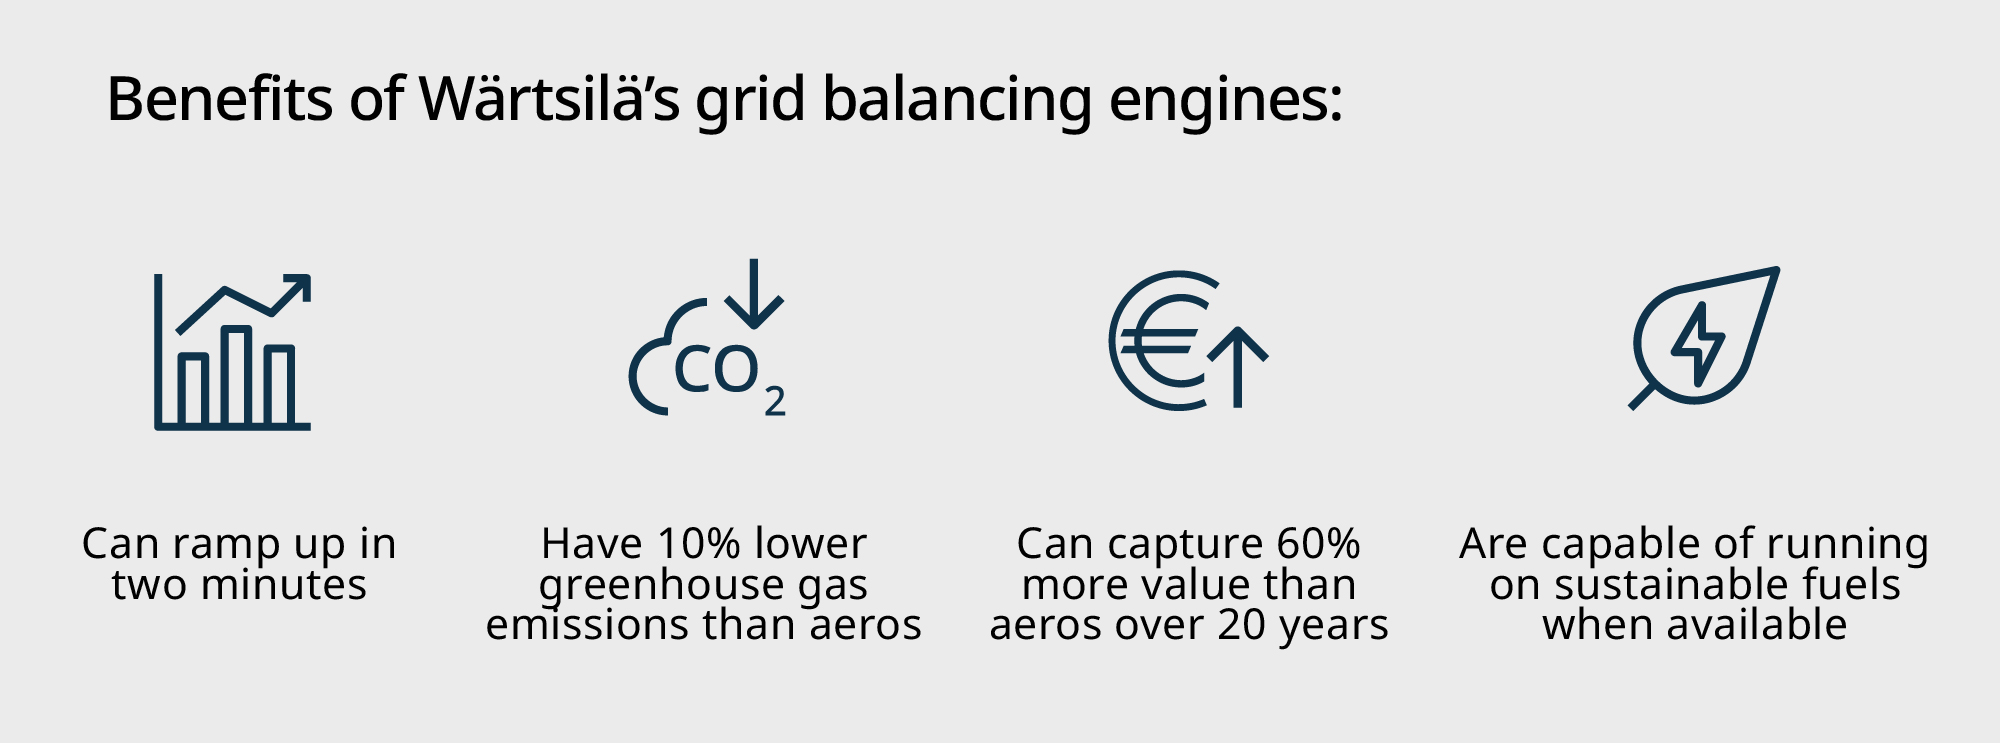 Benefits of Wärtsilä's grid balancing engines infograph